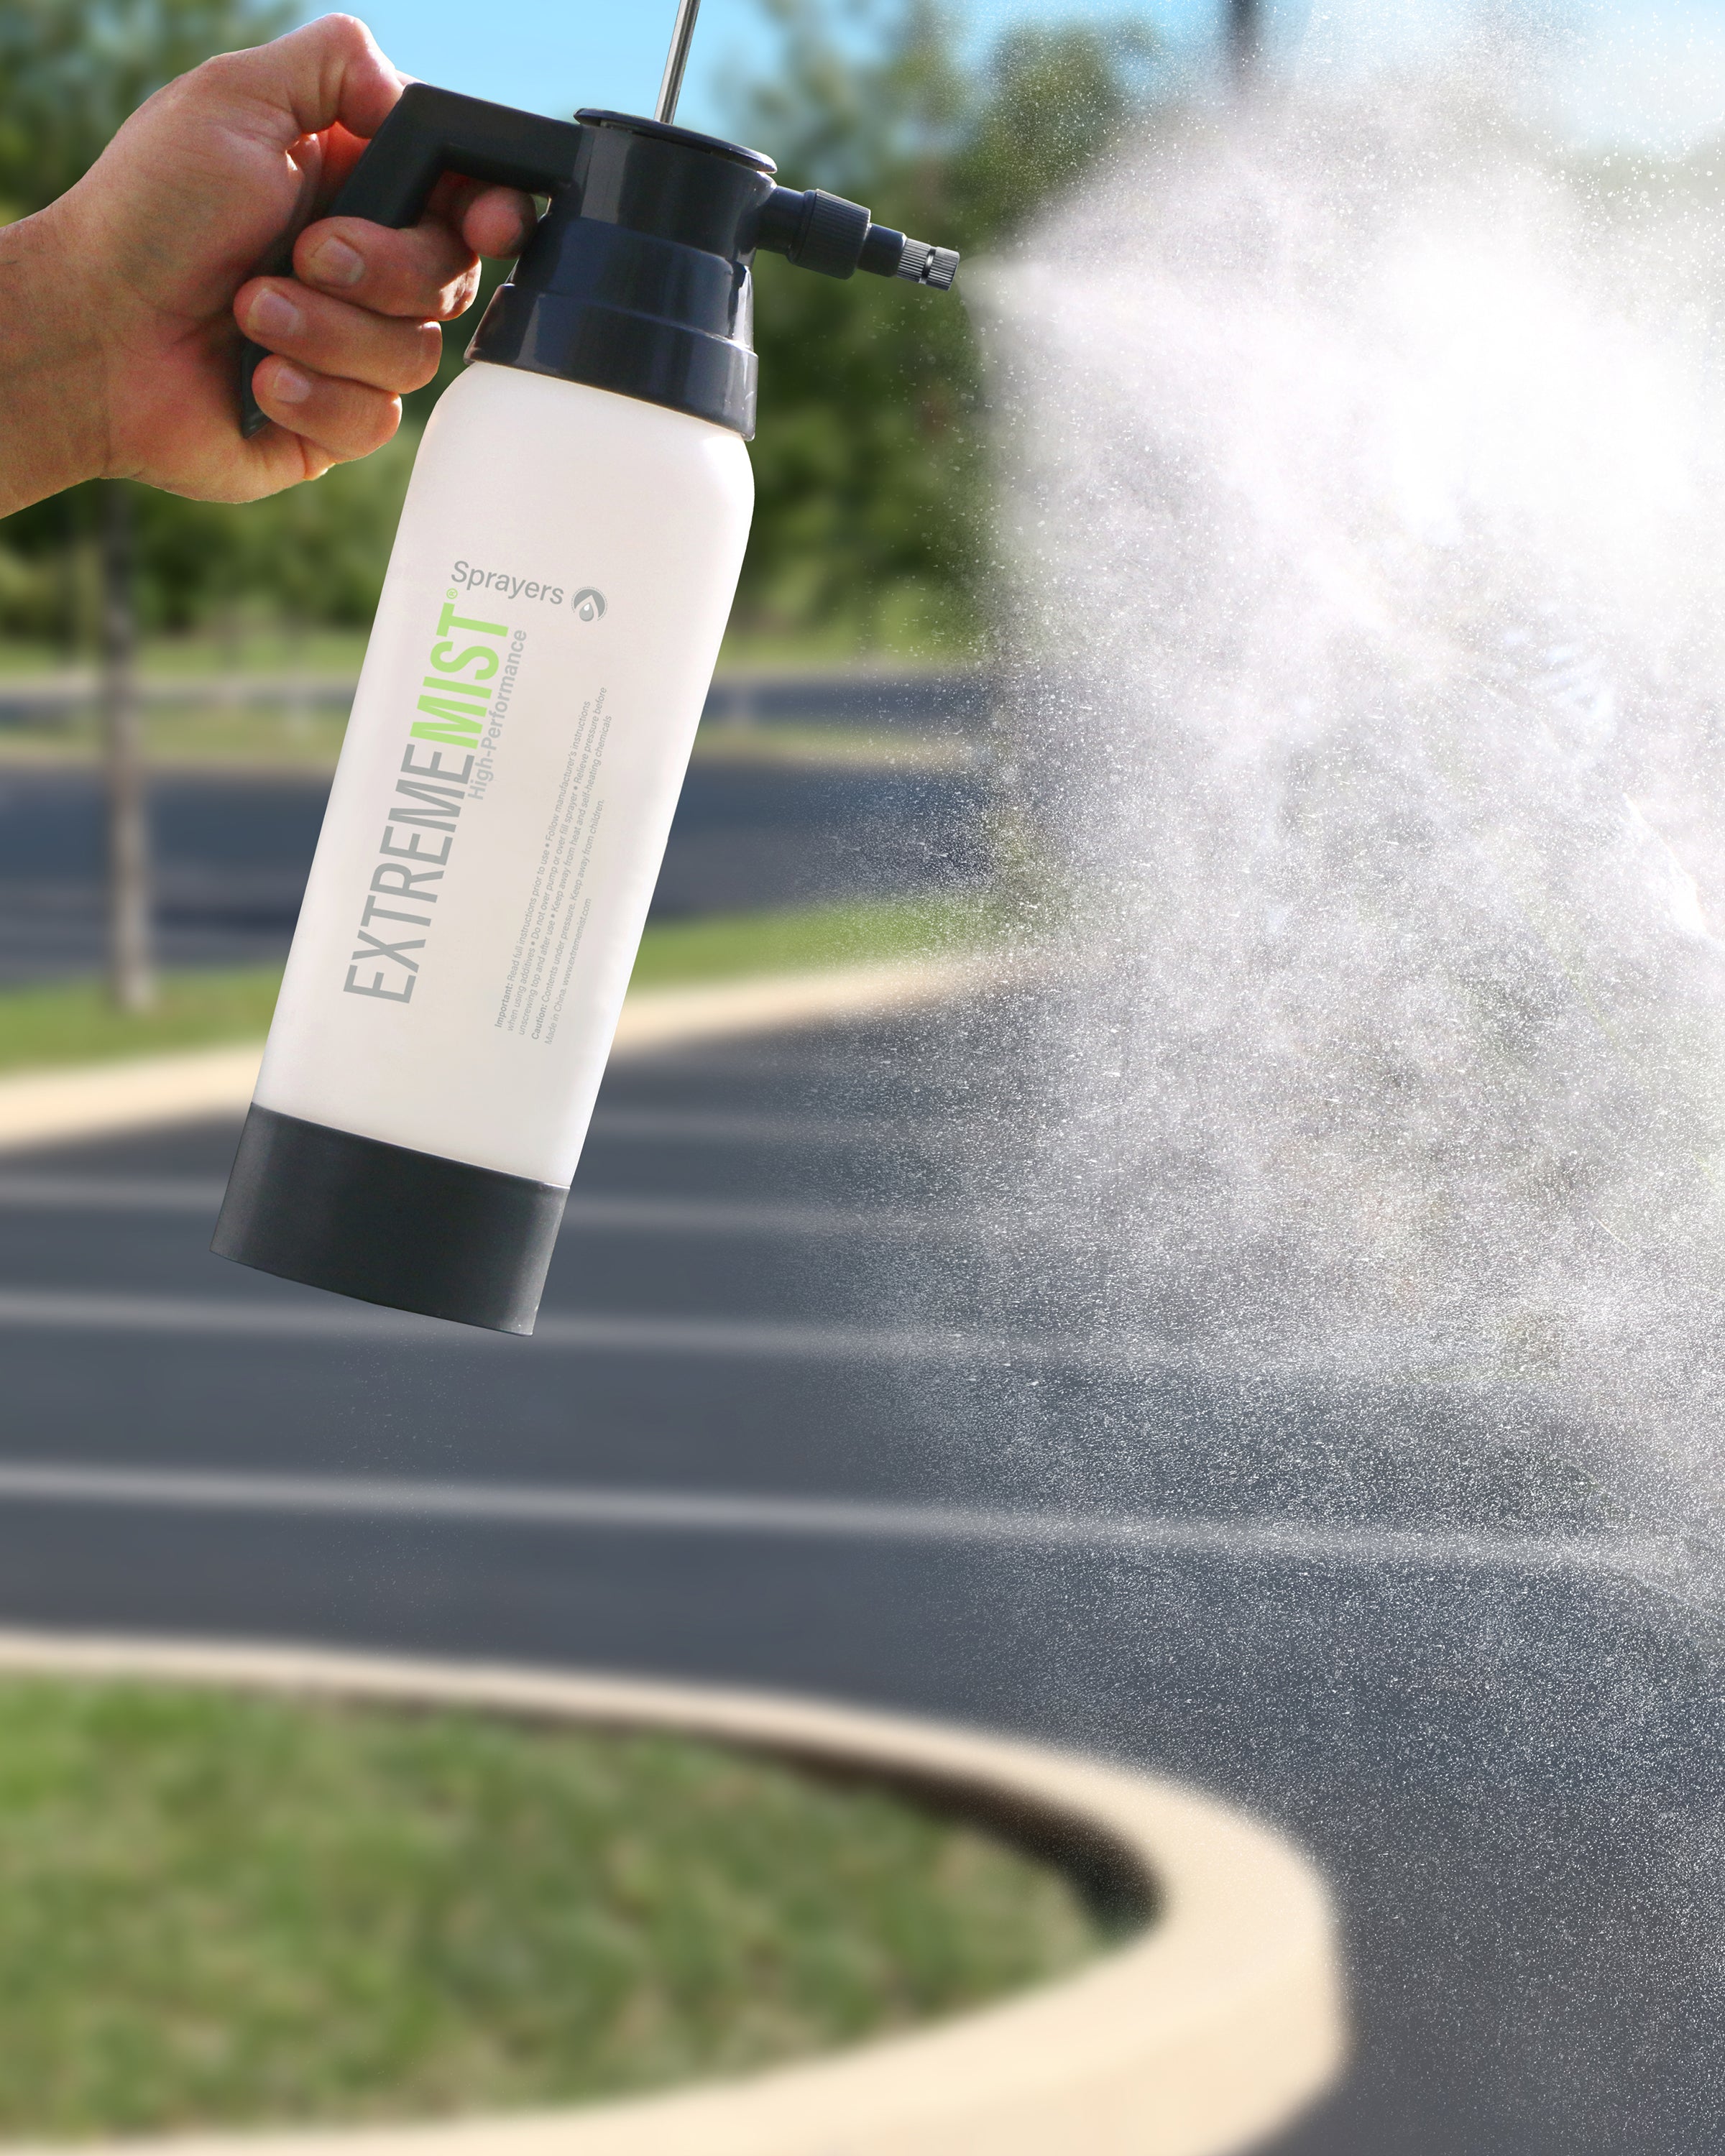 car mister pump-up sprayer spraying mist in parking lot